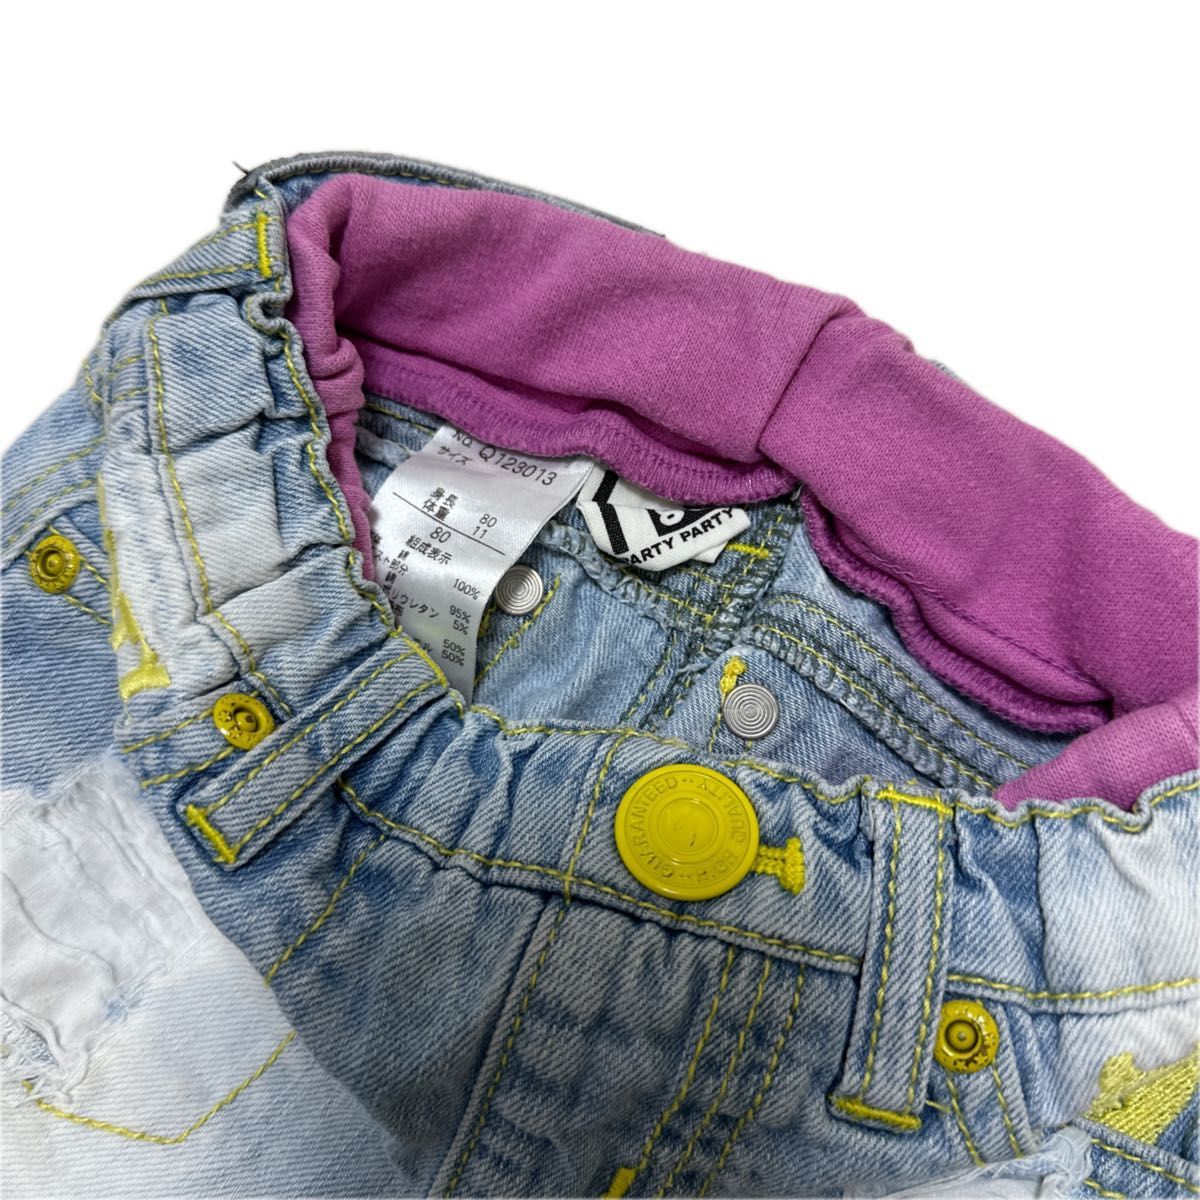 80cmダメージデニムショートパンツPartyParty ピンク黄色 ショートパンツ デニム半ズボン パンツ ショーパンクラッシュ